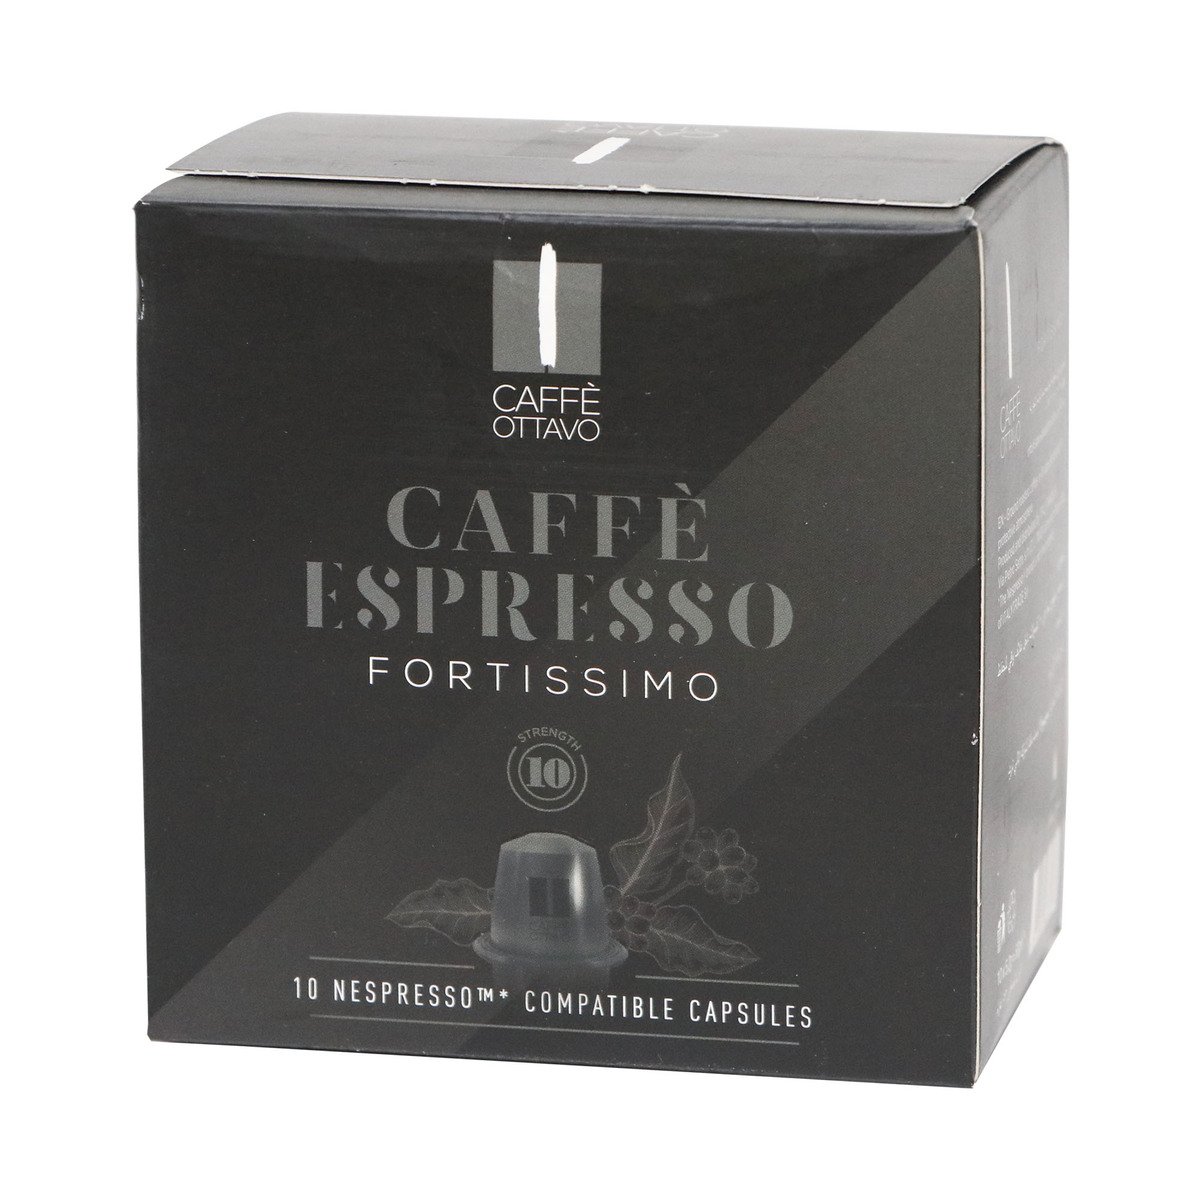 Caffe Ottavo Espresso Coffee Fortissimo 10pcs